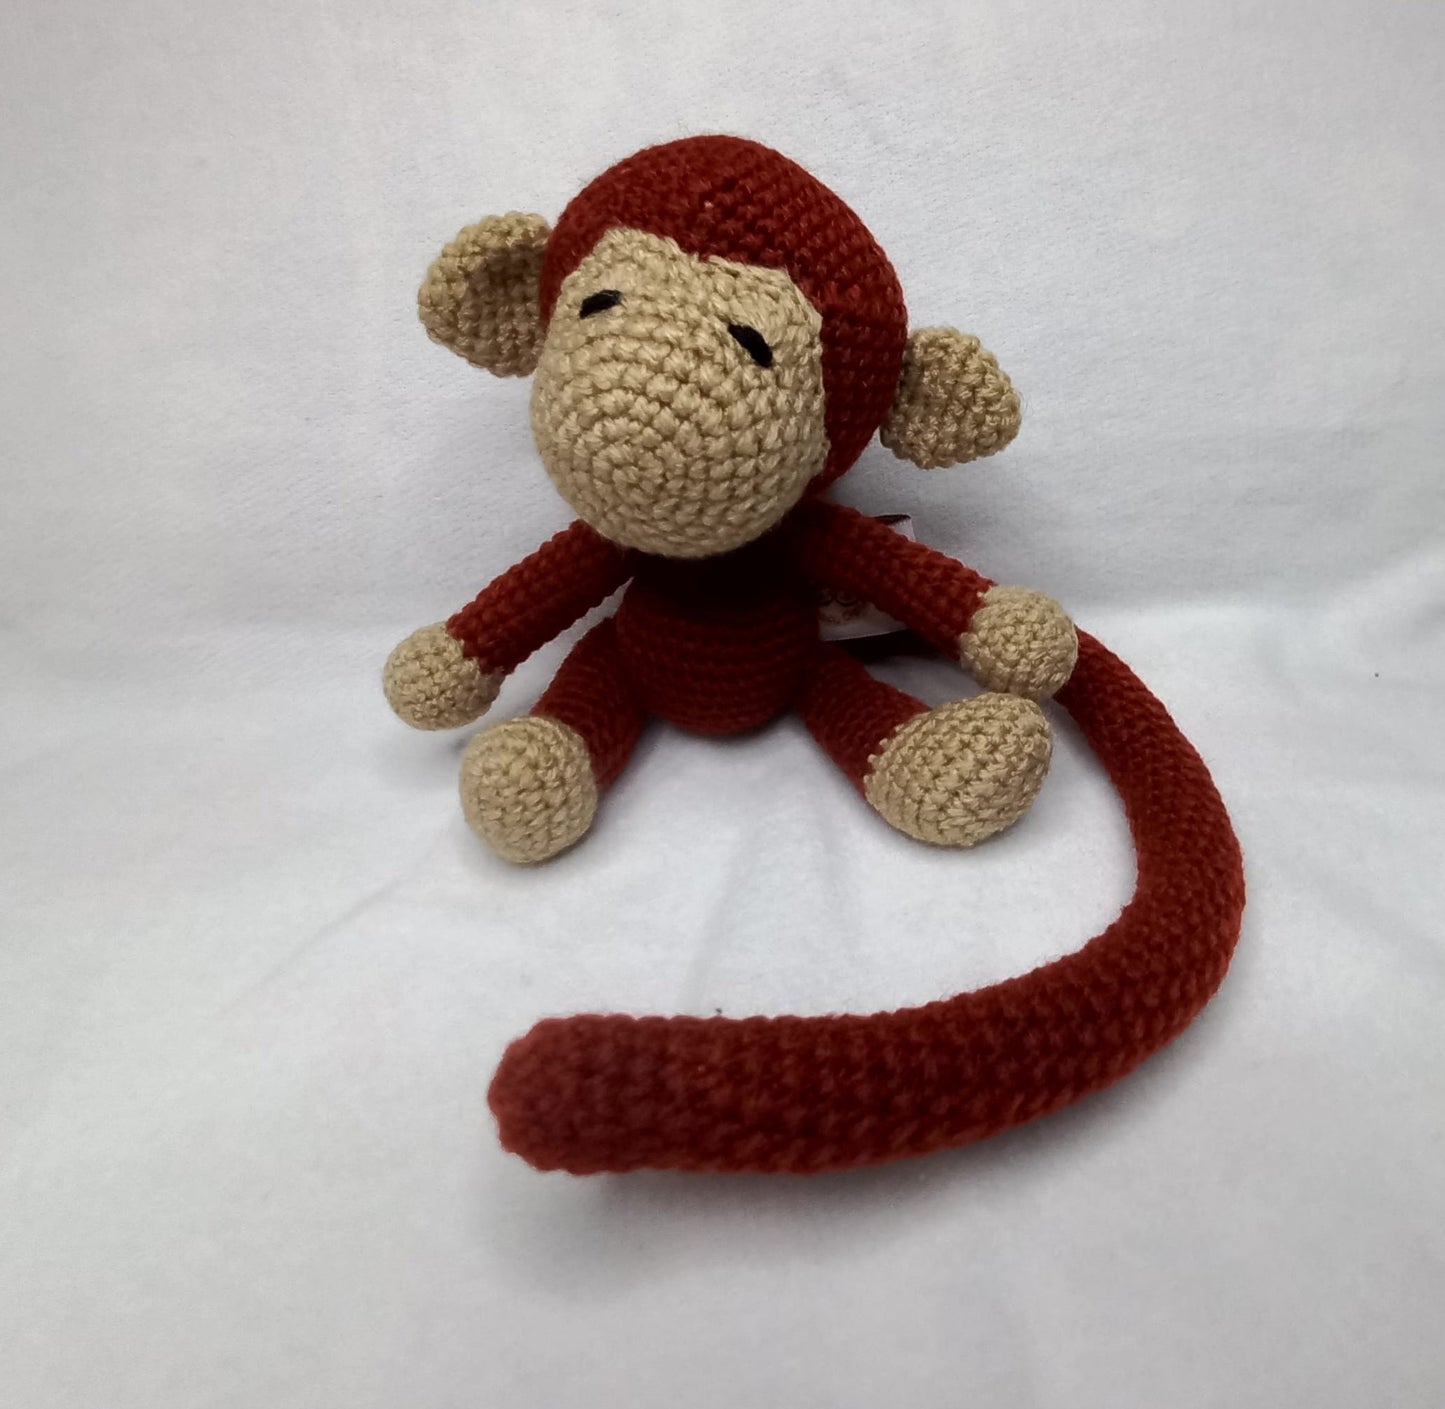 Handmade Crochet Cute Monkey toy - Soft stuffed animal toy